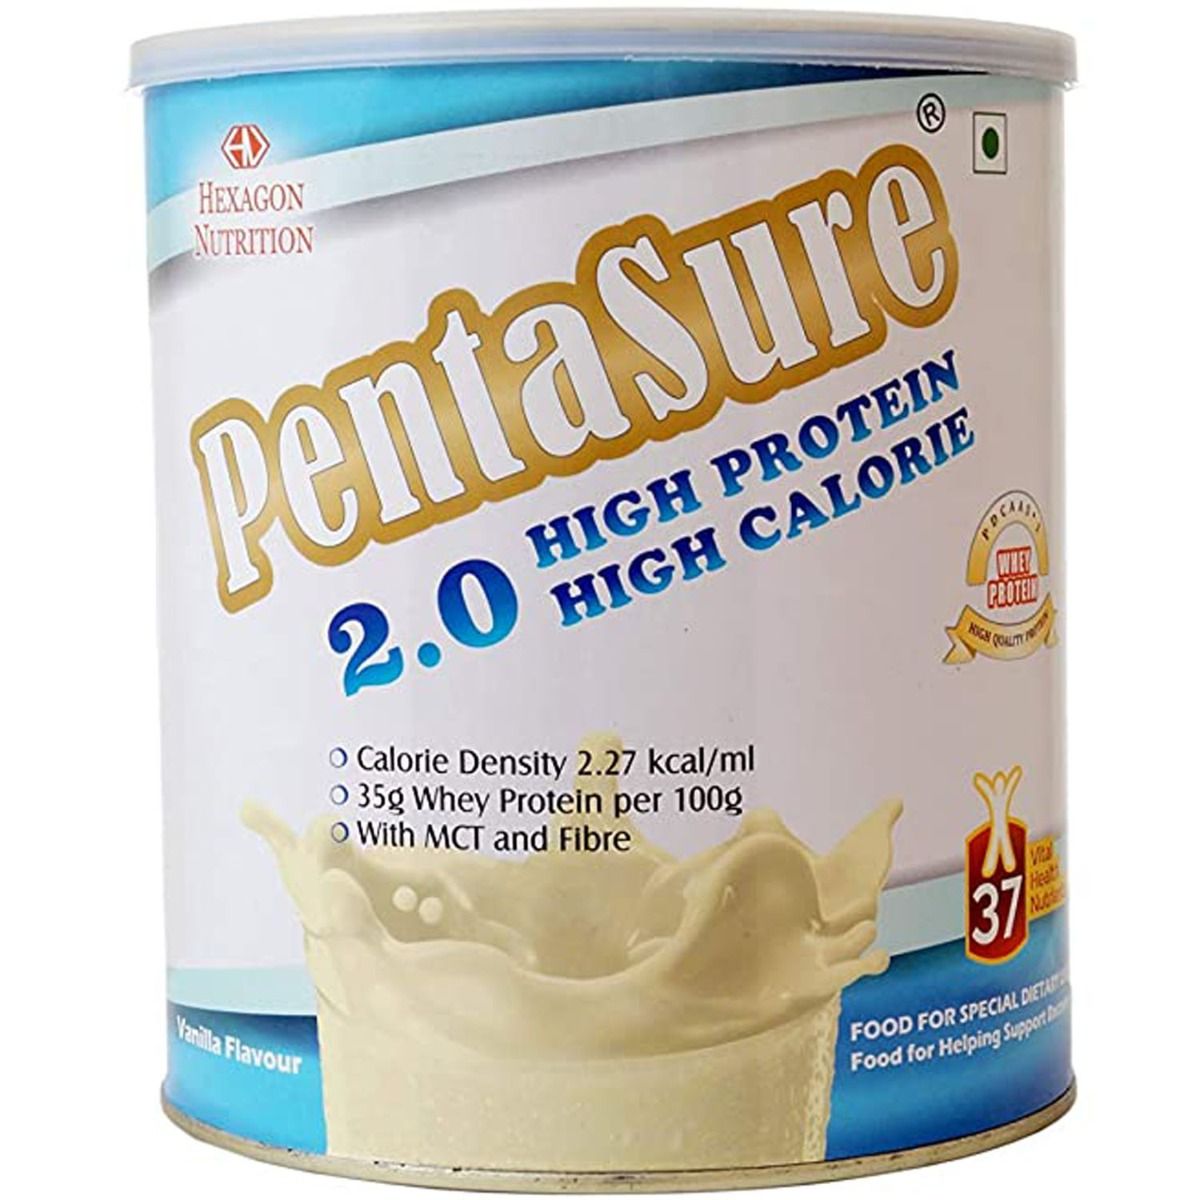 Pentasure 2.0 Vanilla Flavoured High Protein Powder, 1 Kg, Pack of 1 